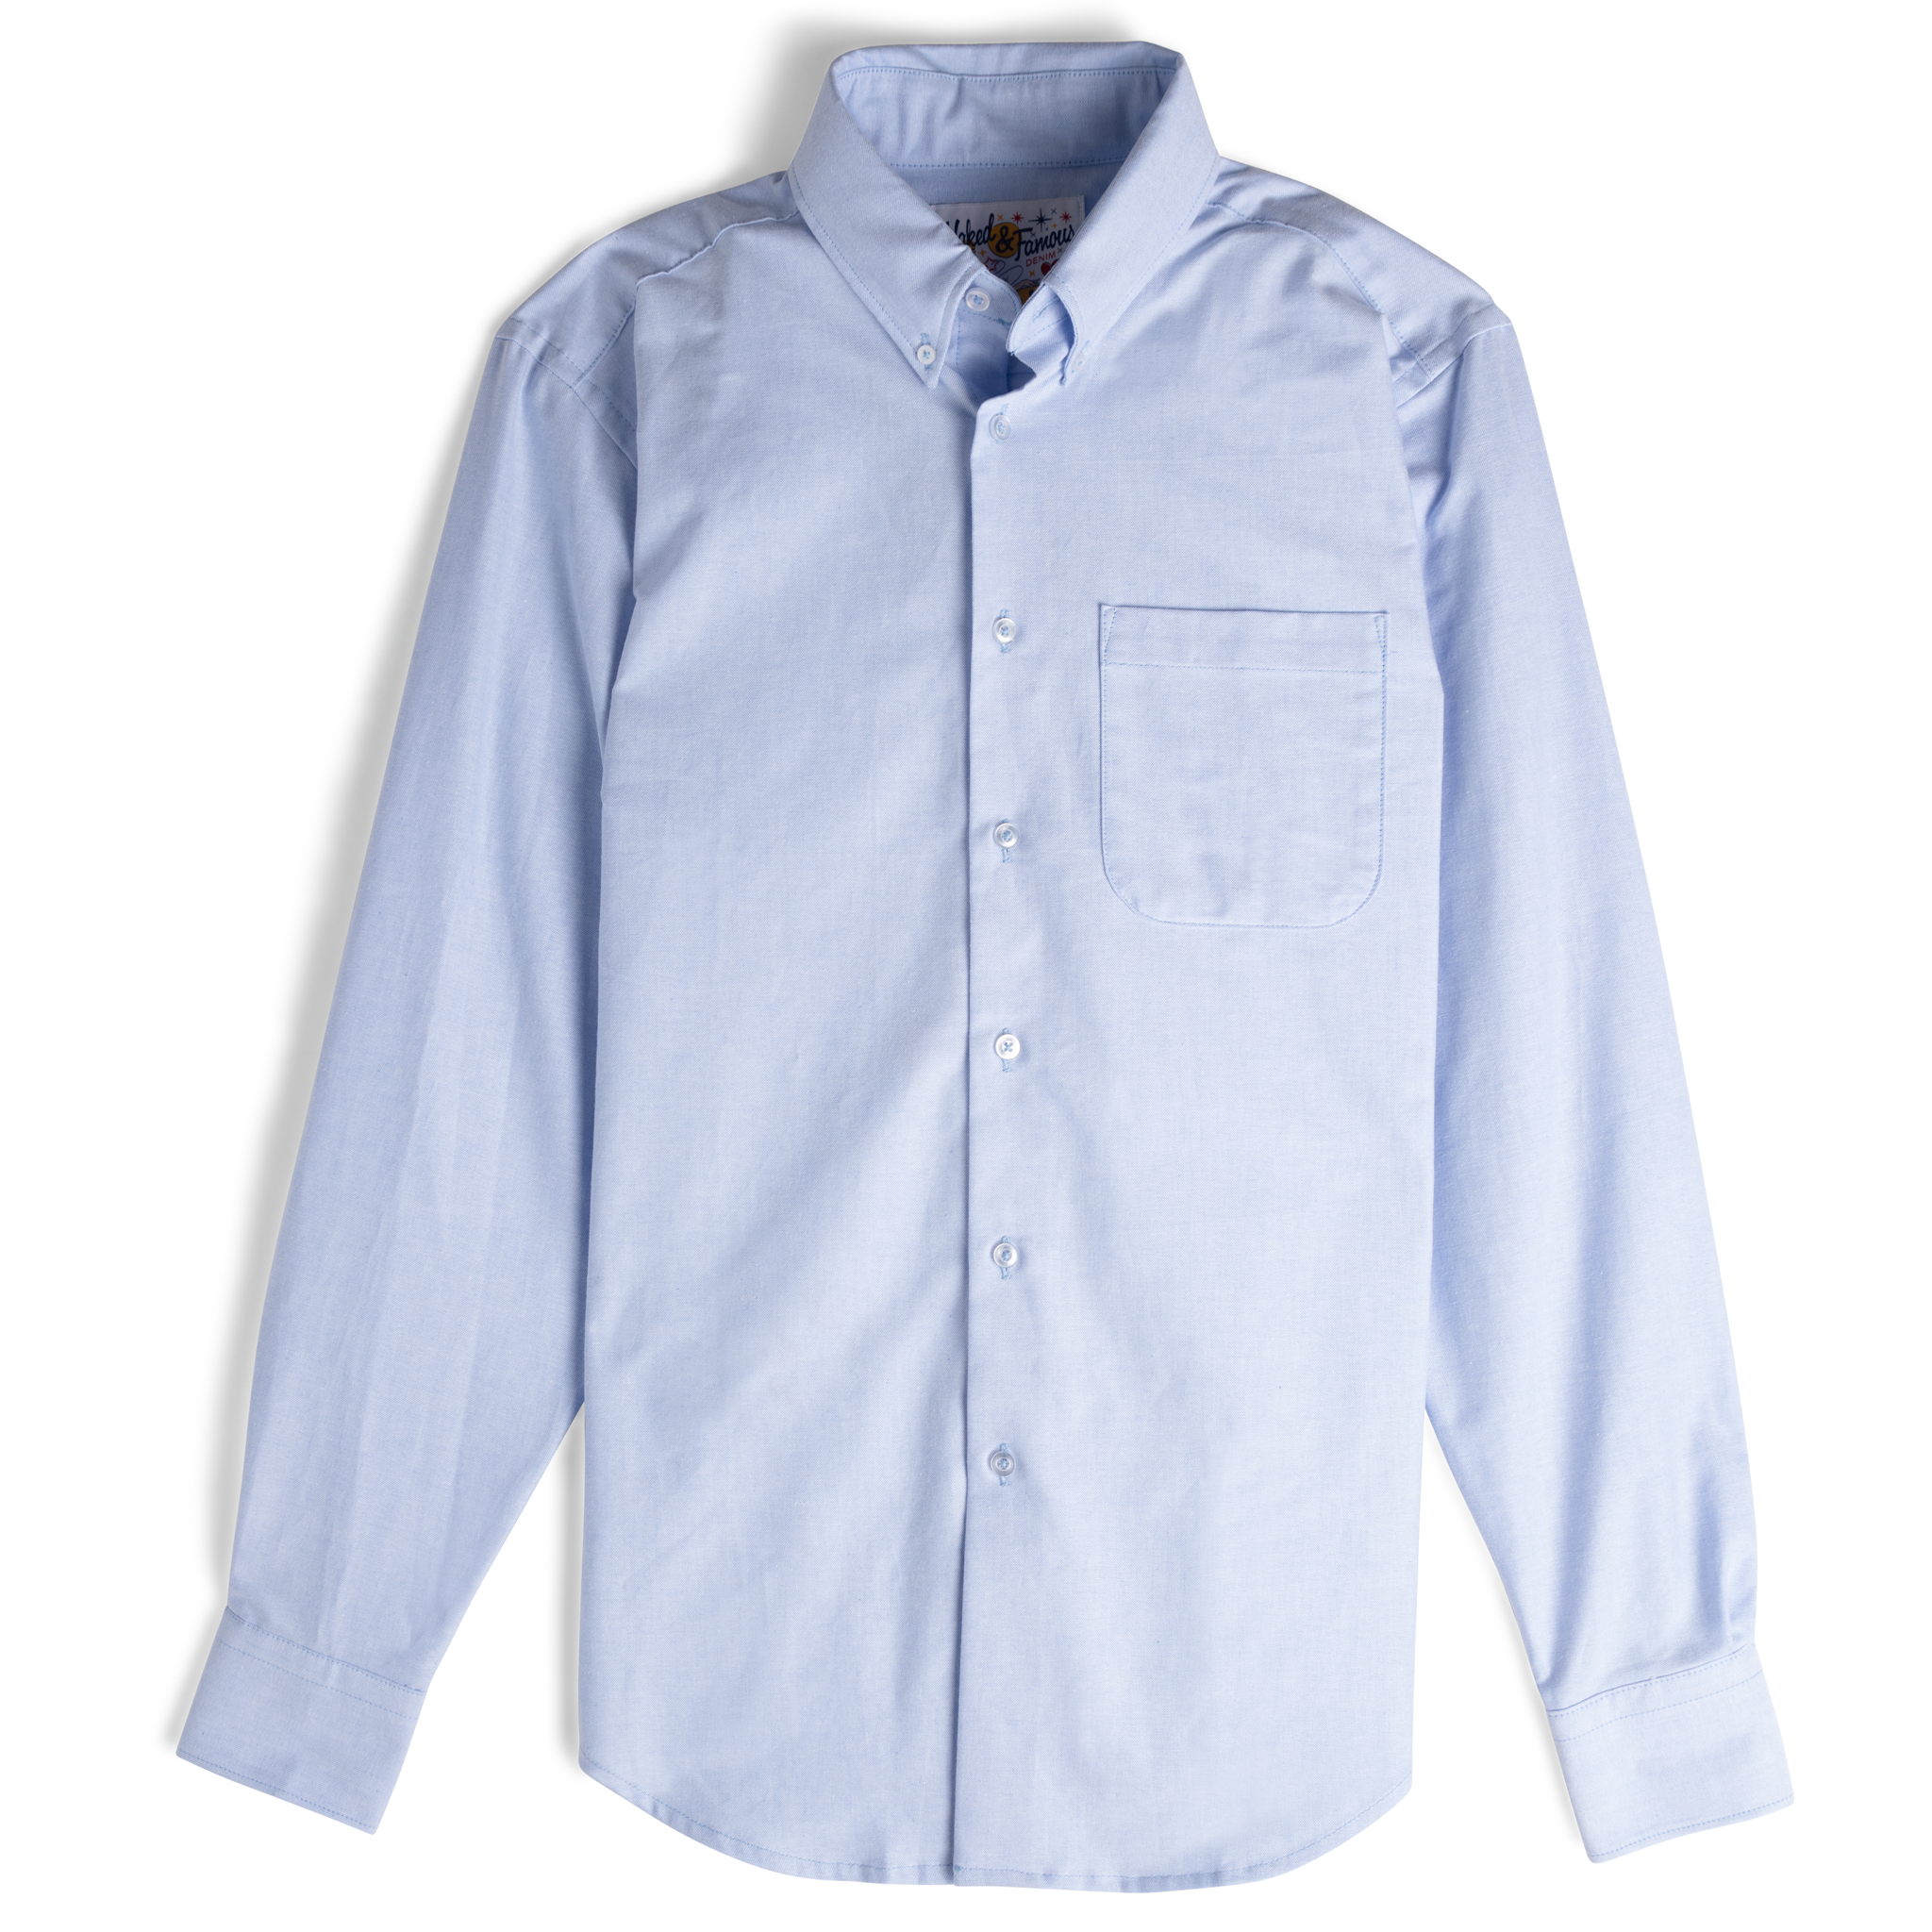  Easy Shirt - Cotton Oxford - Pale Blue - flat front 